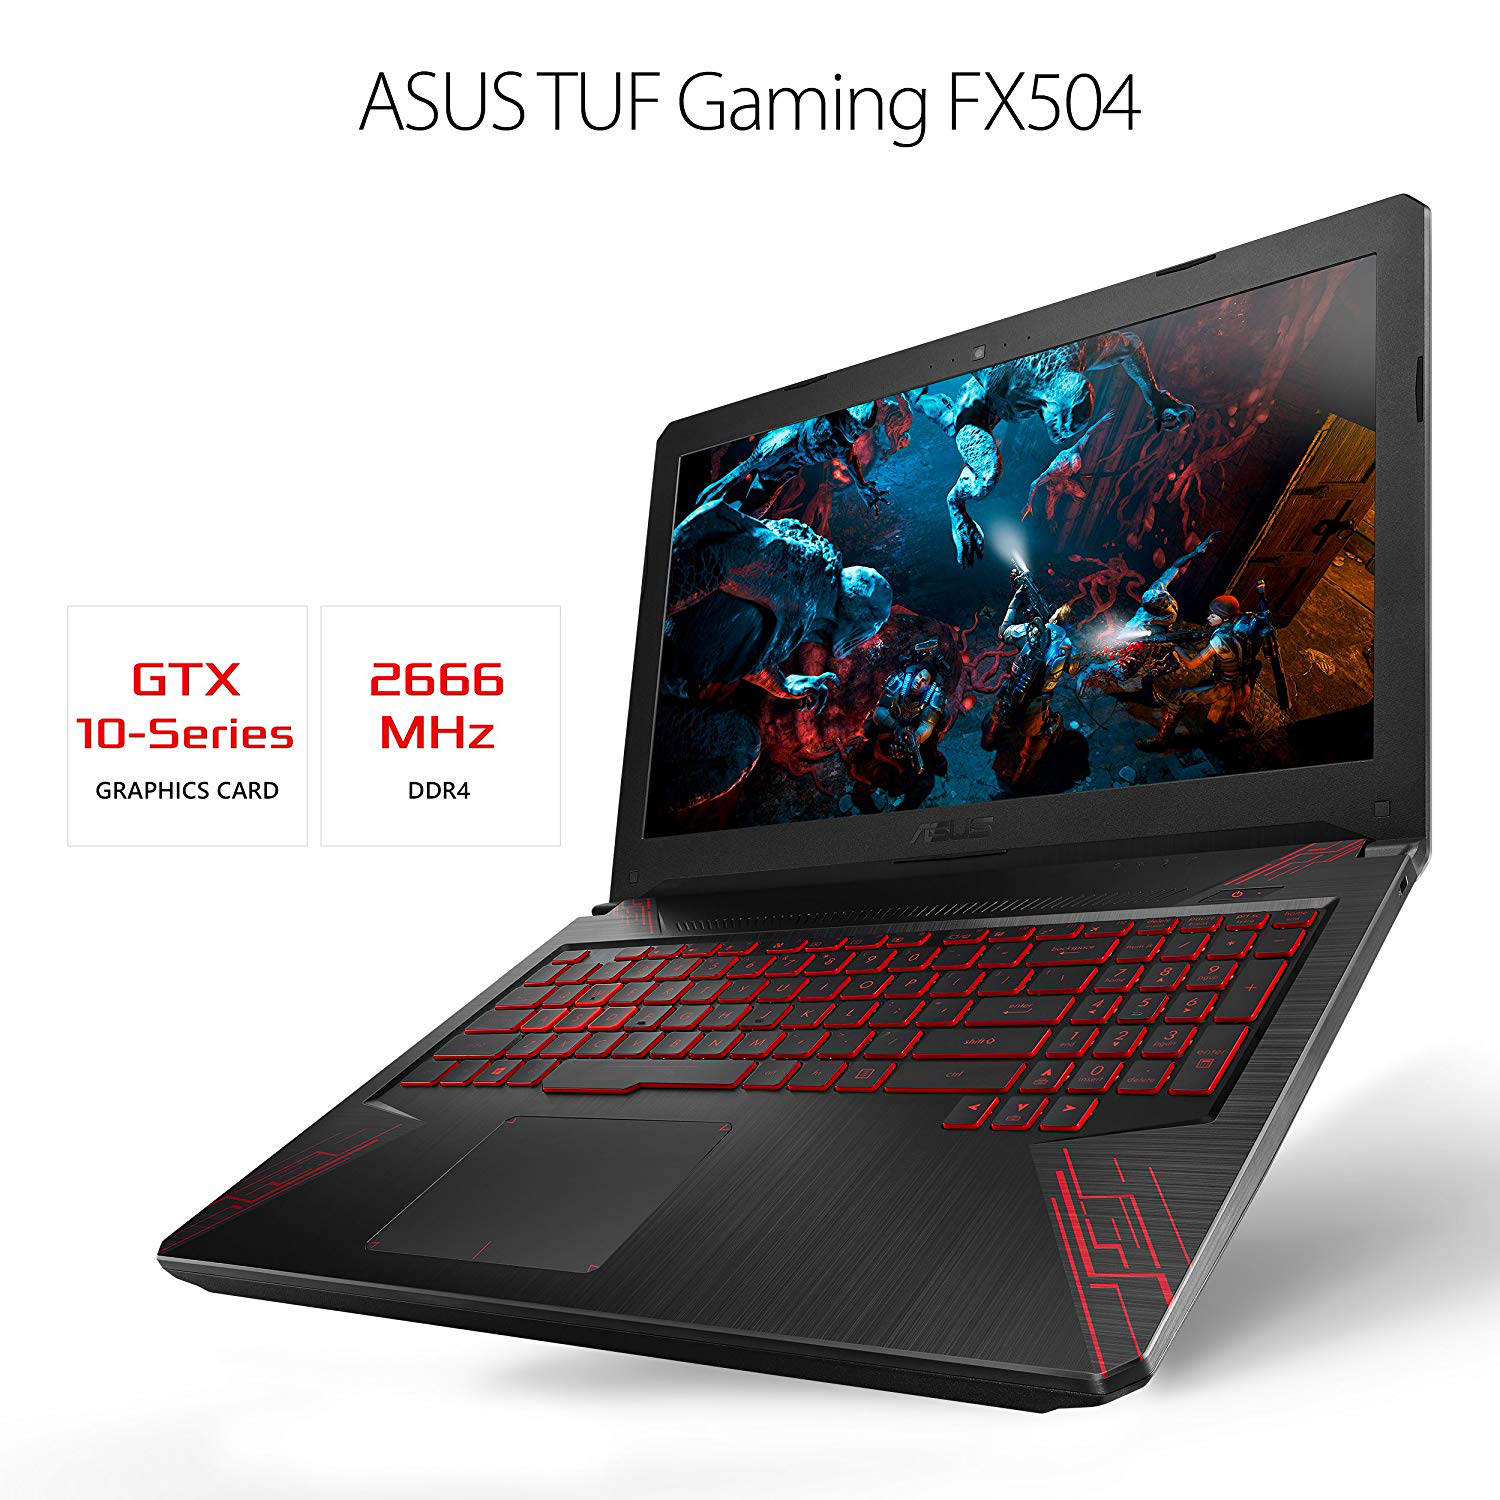 ASUS TUF Thin & Light Gaming Laptop PC (FX504) 15.6” Full HD, 8th-Gen Intel Core i5-8300H (up to 3.9GHz), GeForce GTX 1050 2GB, 8GB DDR4 2666 MHz, 1TB FireCuda SSHD, Windows 10 64-bit - FX504GD-ES51